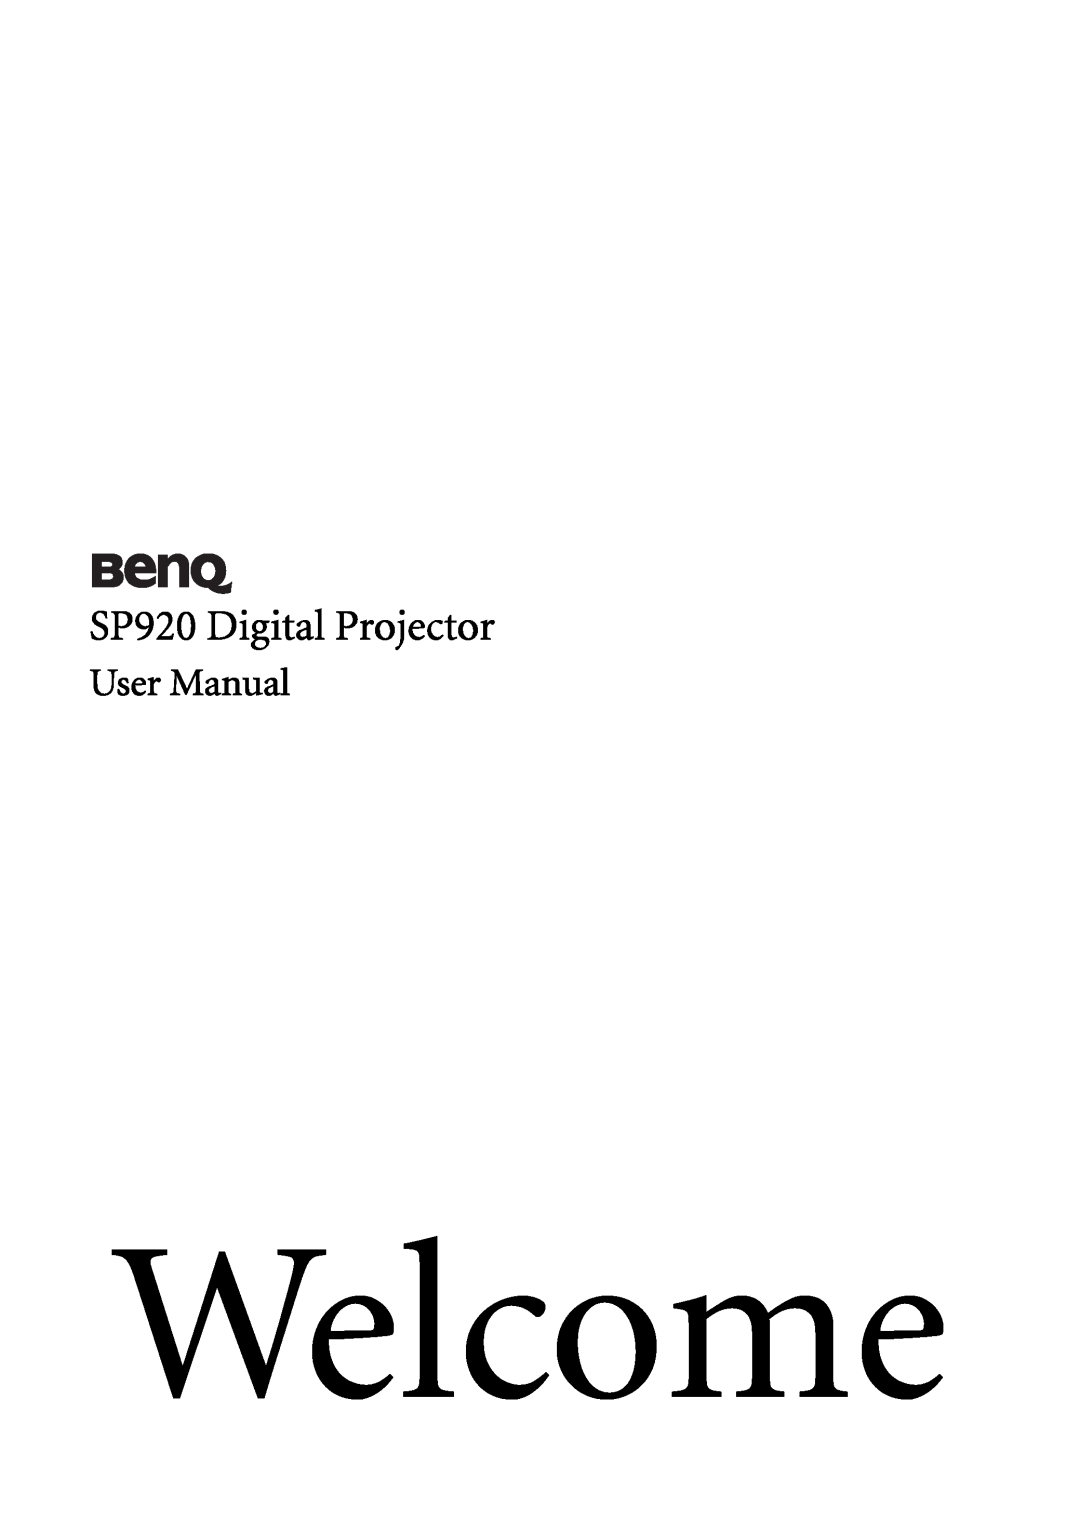 BenQ user manual SP920 Digital Projector, Welcome, User Manual 